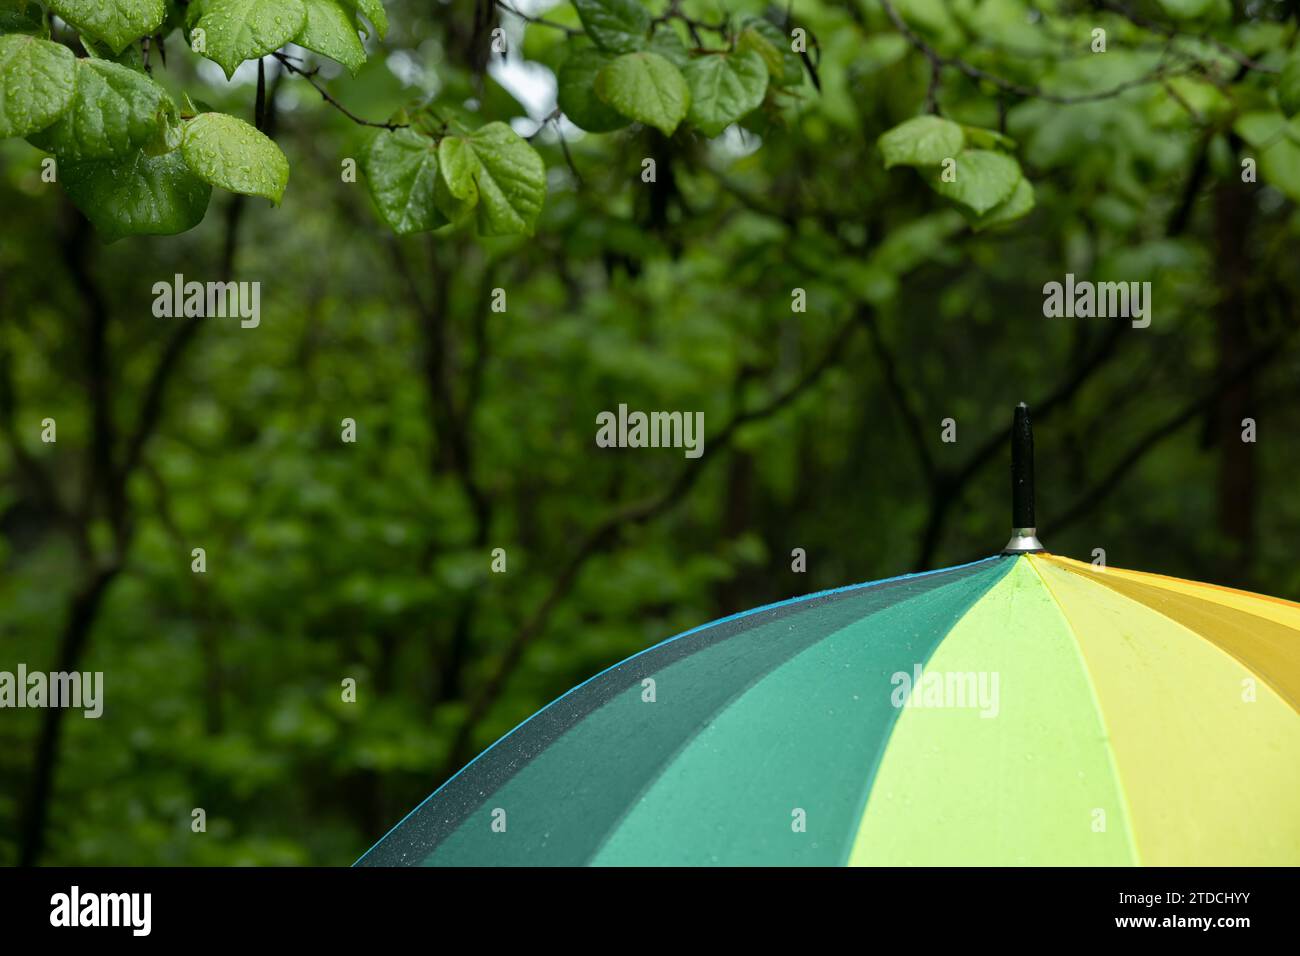 Leaves with raindrops and rainbow umbrella Stock Photo